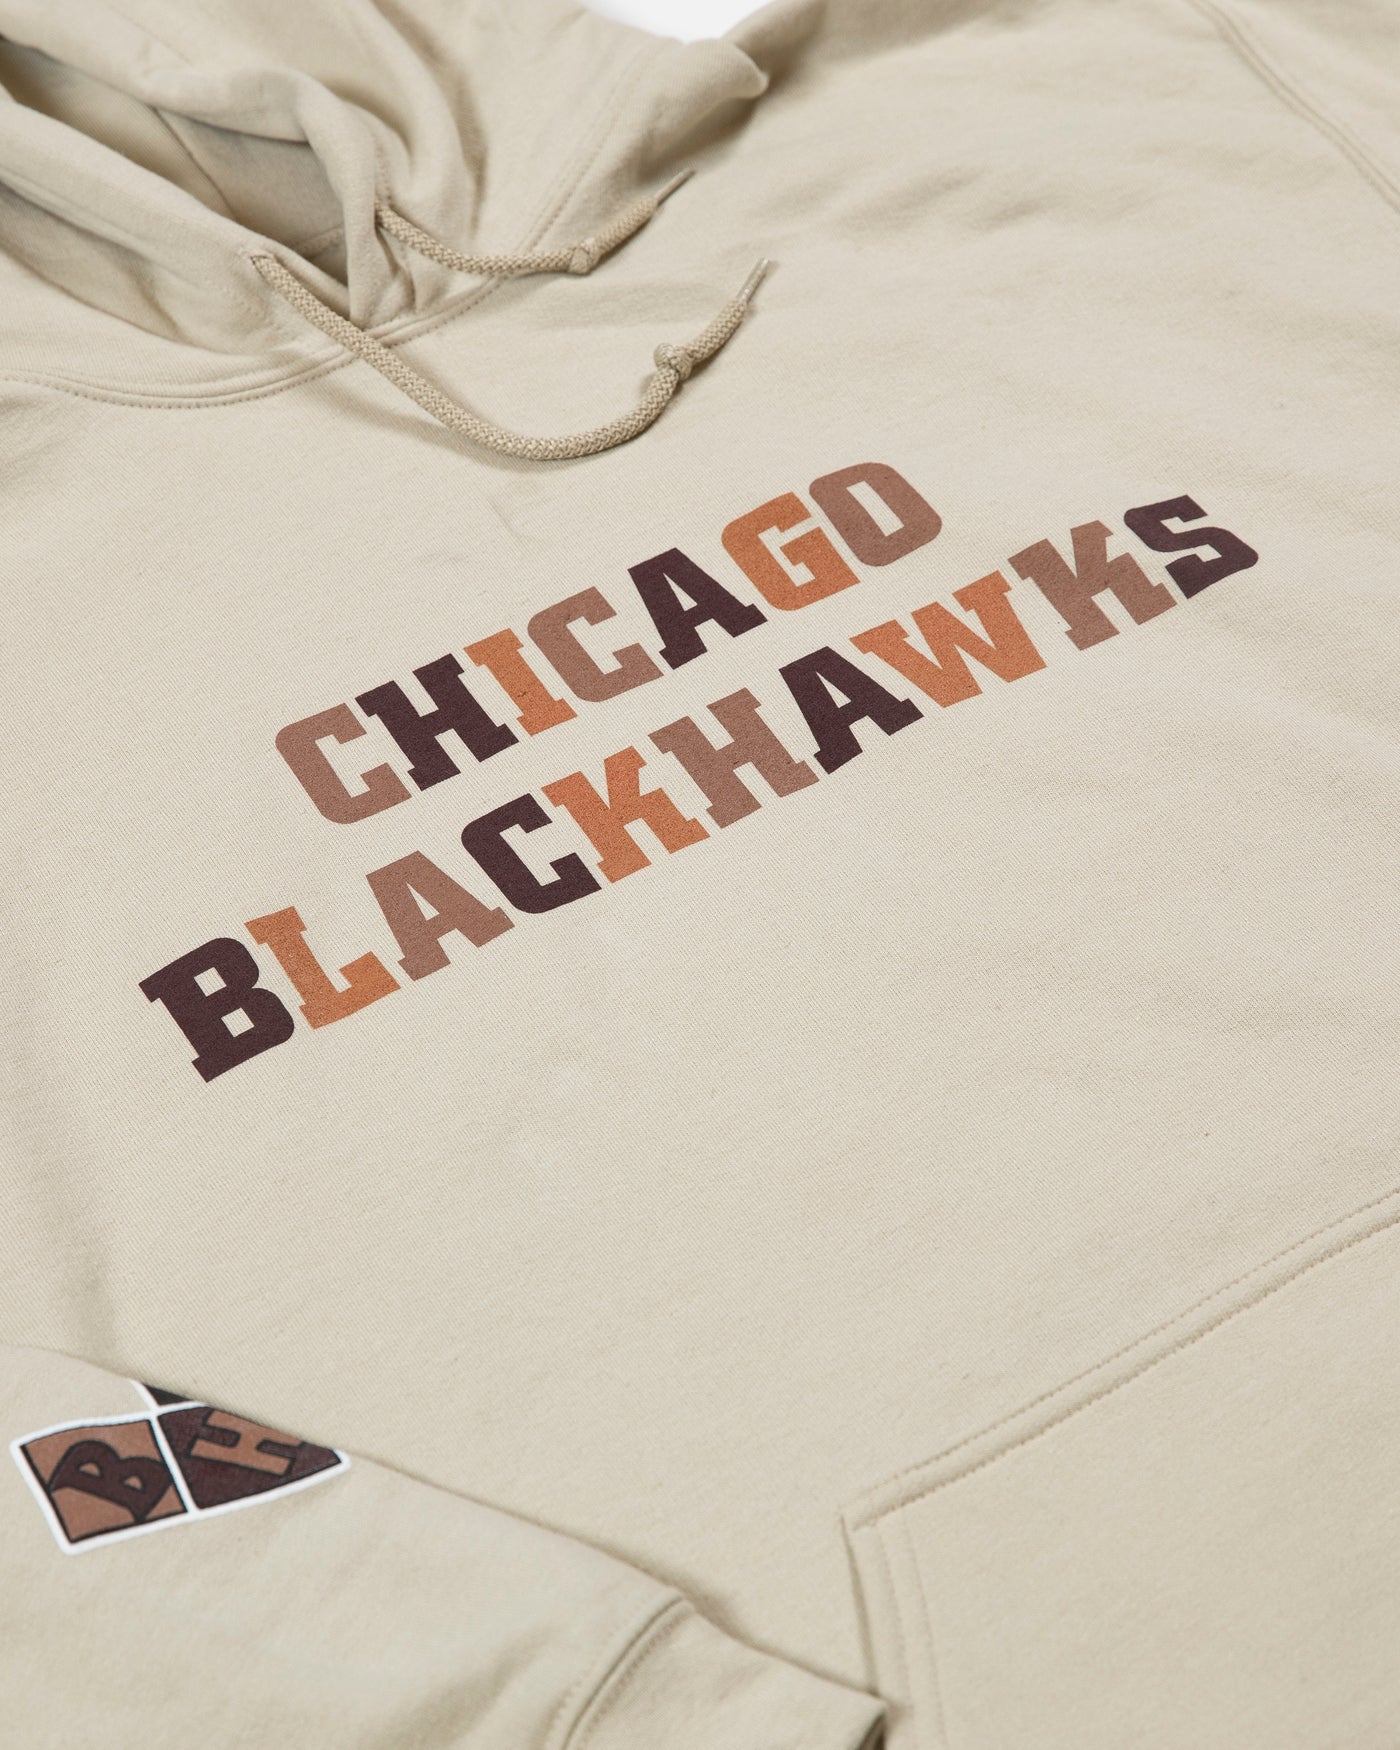 Chicago Blackhawks Black History Month Foundation Hoodie